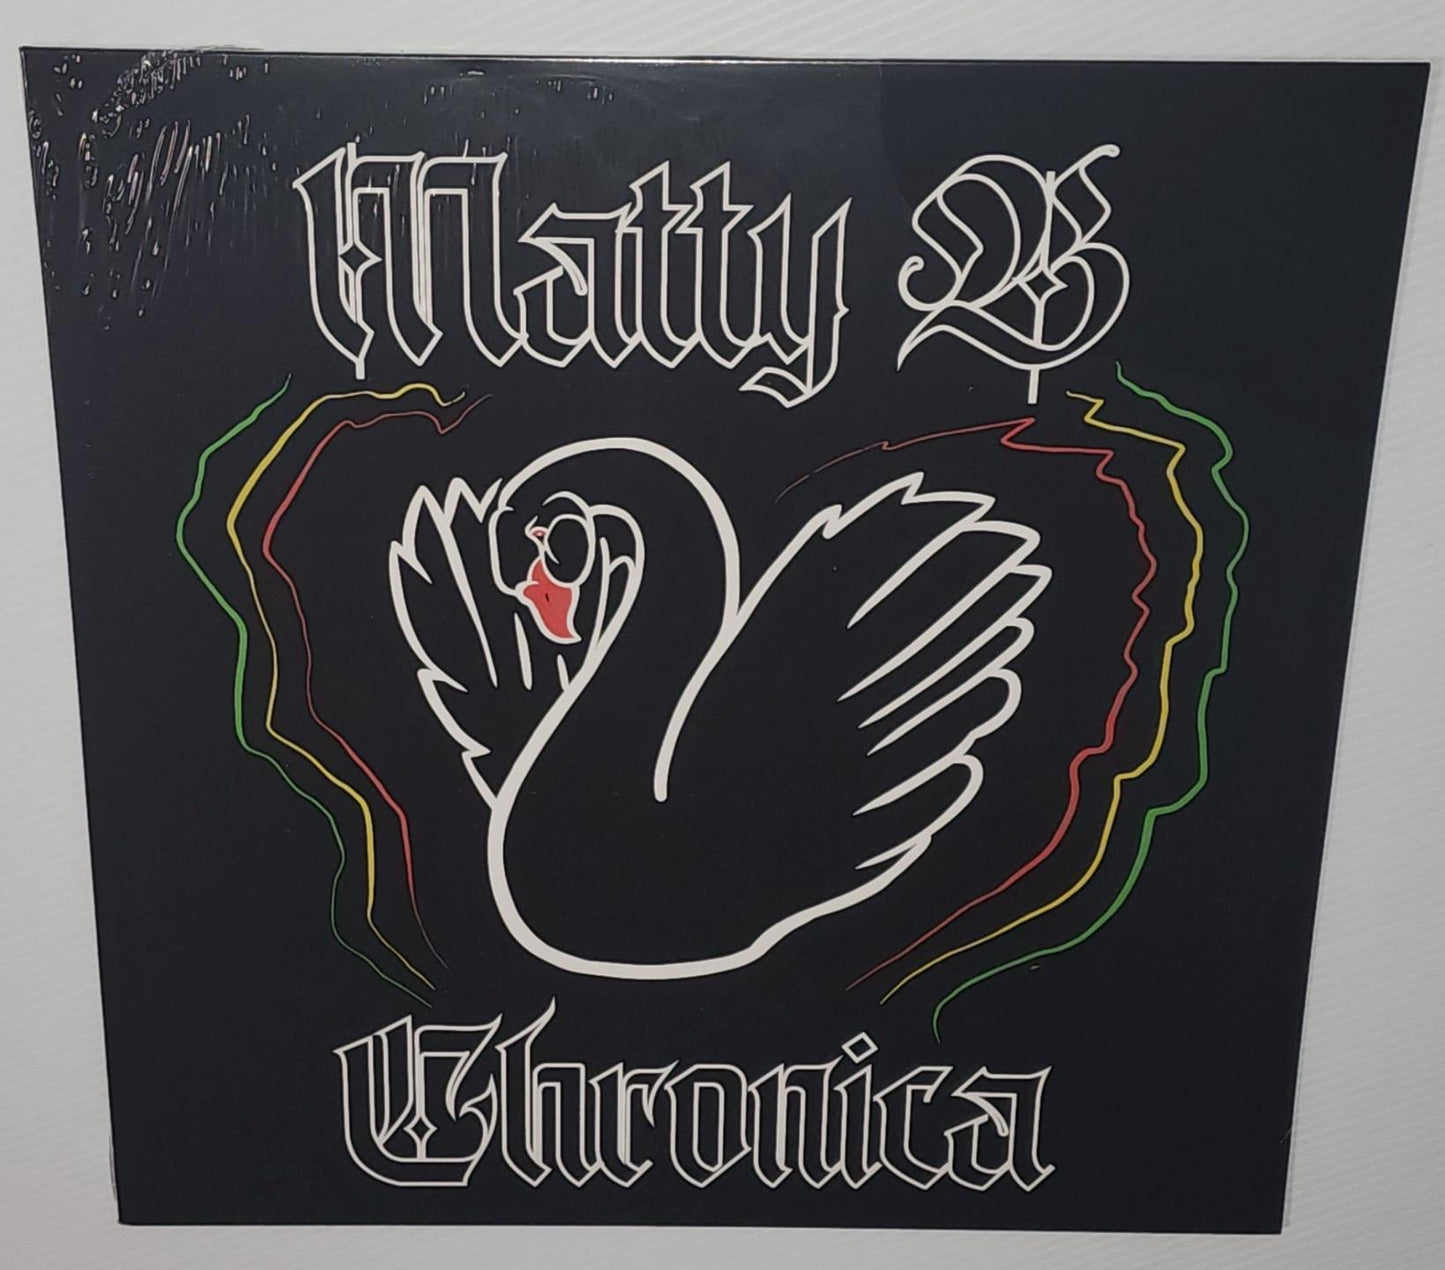 Matty B - Chronica (2022) (Limited Edition Autographed Vinyl LP)